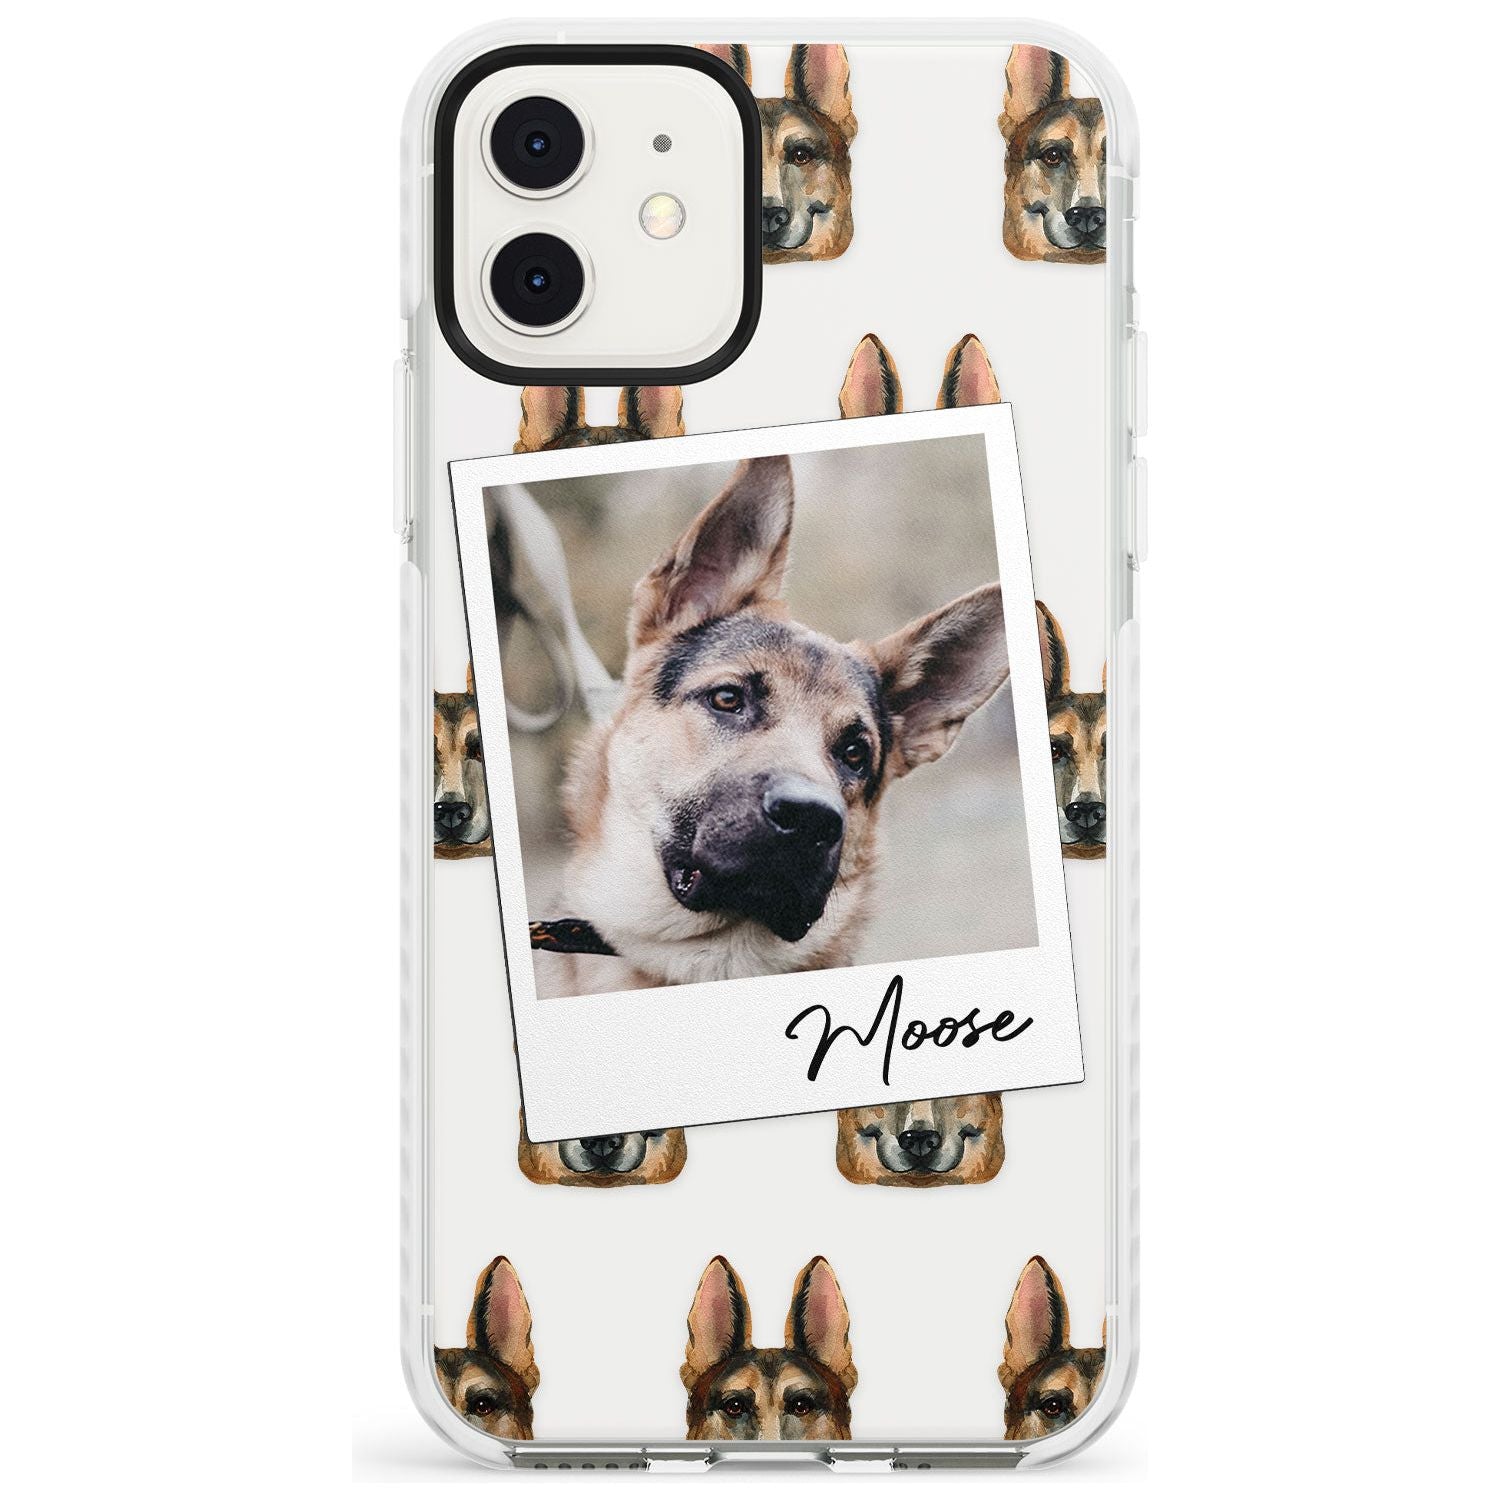 German Shepherd - Custom Dog Photo Slim TPU Phone Case for iPhone 11